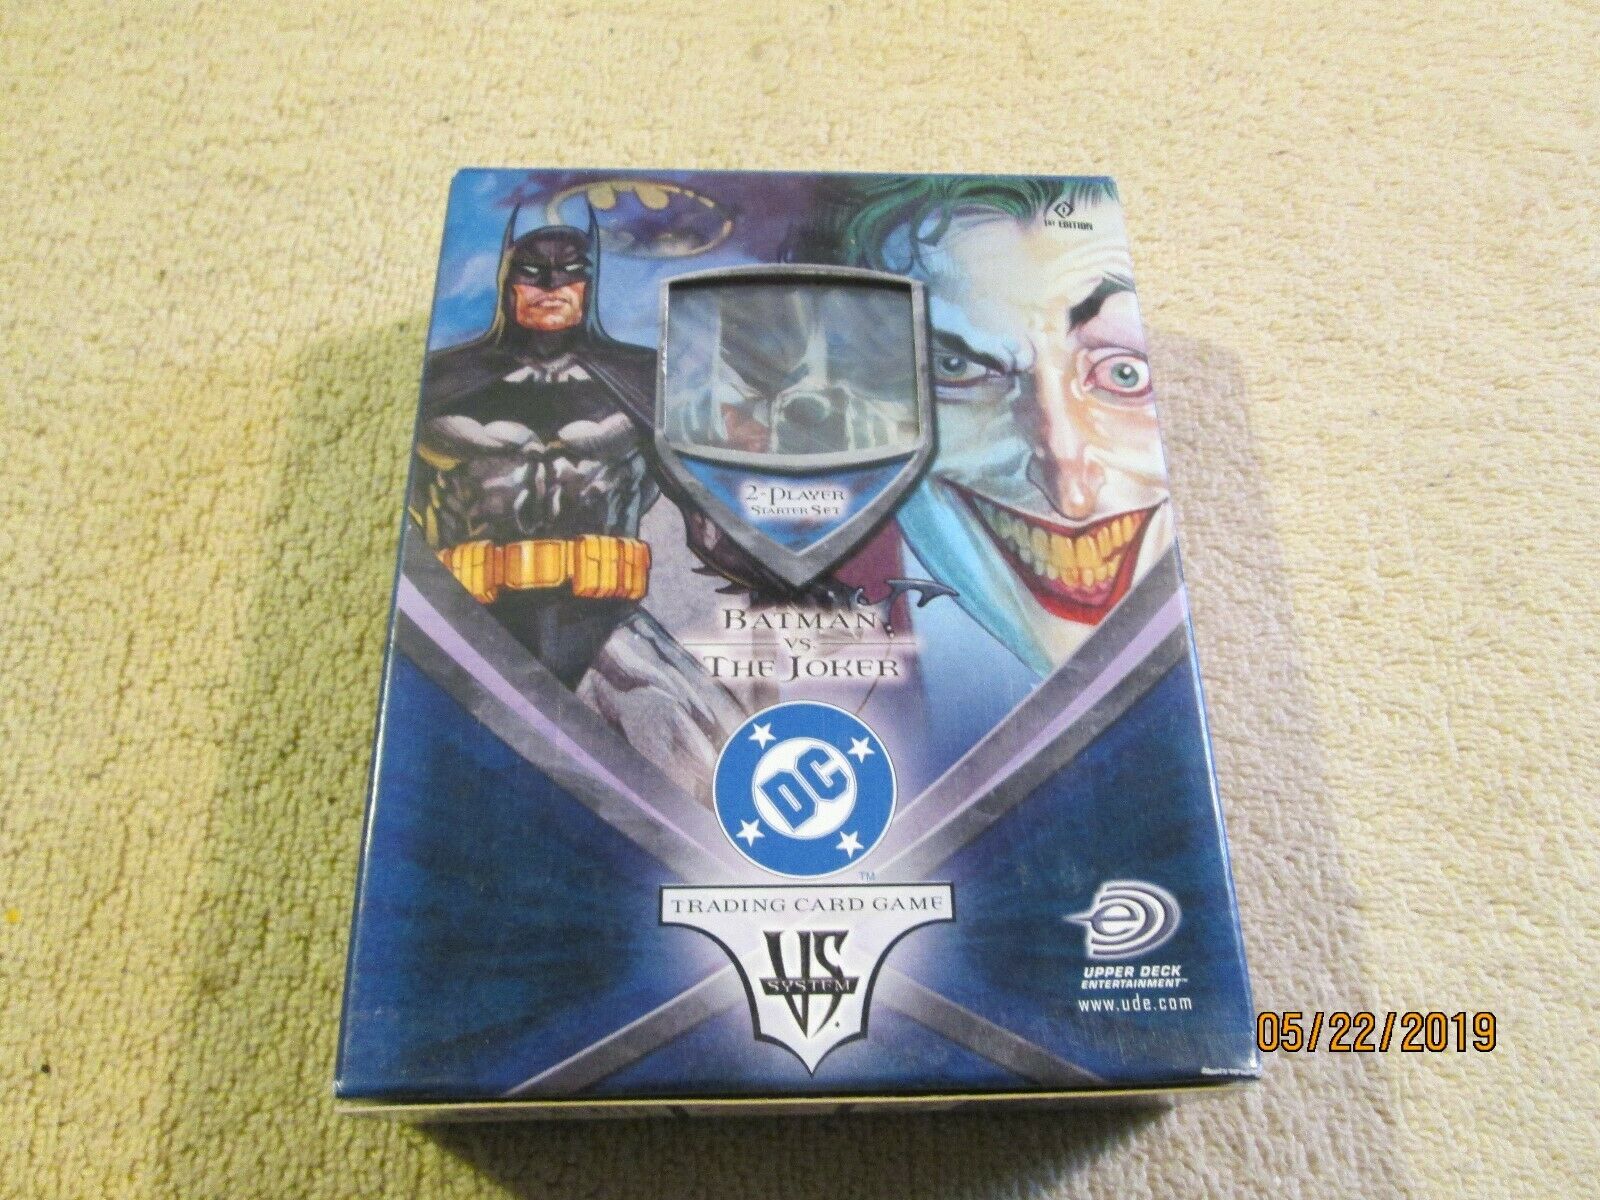 Batman Vs Joker Card Game - HD Wallpaper 